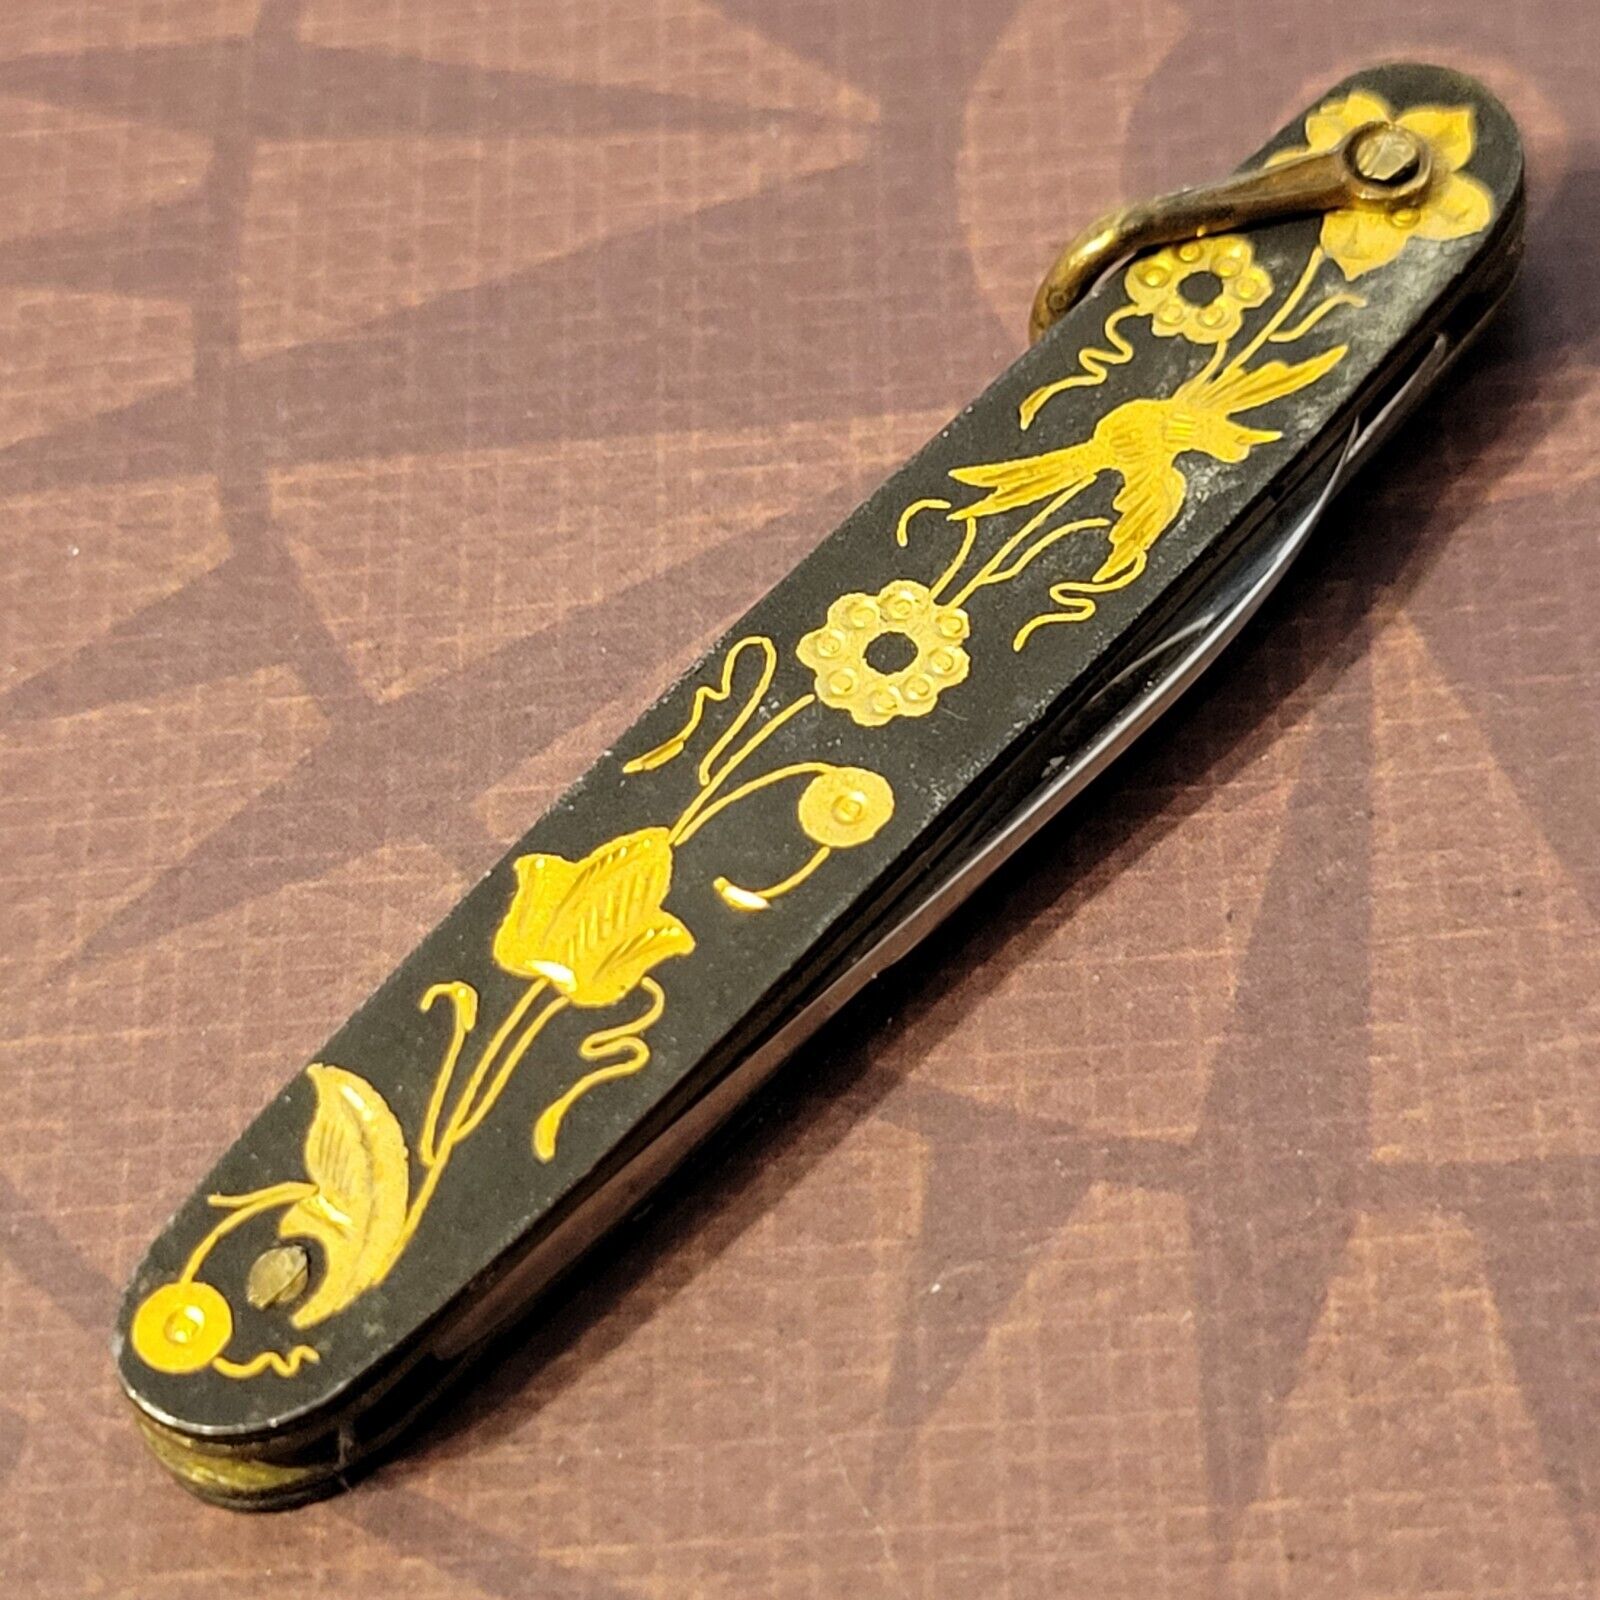 Iher Knife Made In Spain Gents Two Blade Pen Vintage Folder